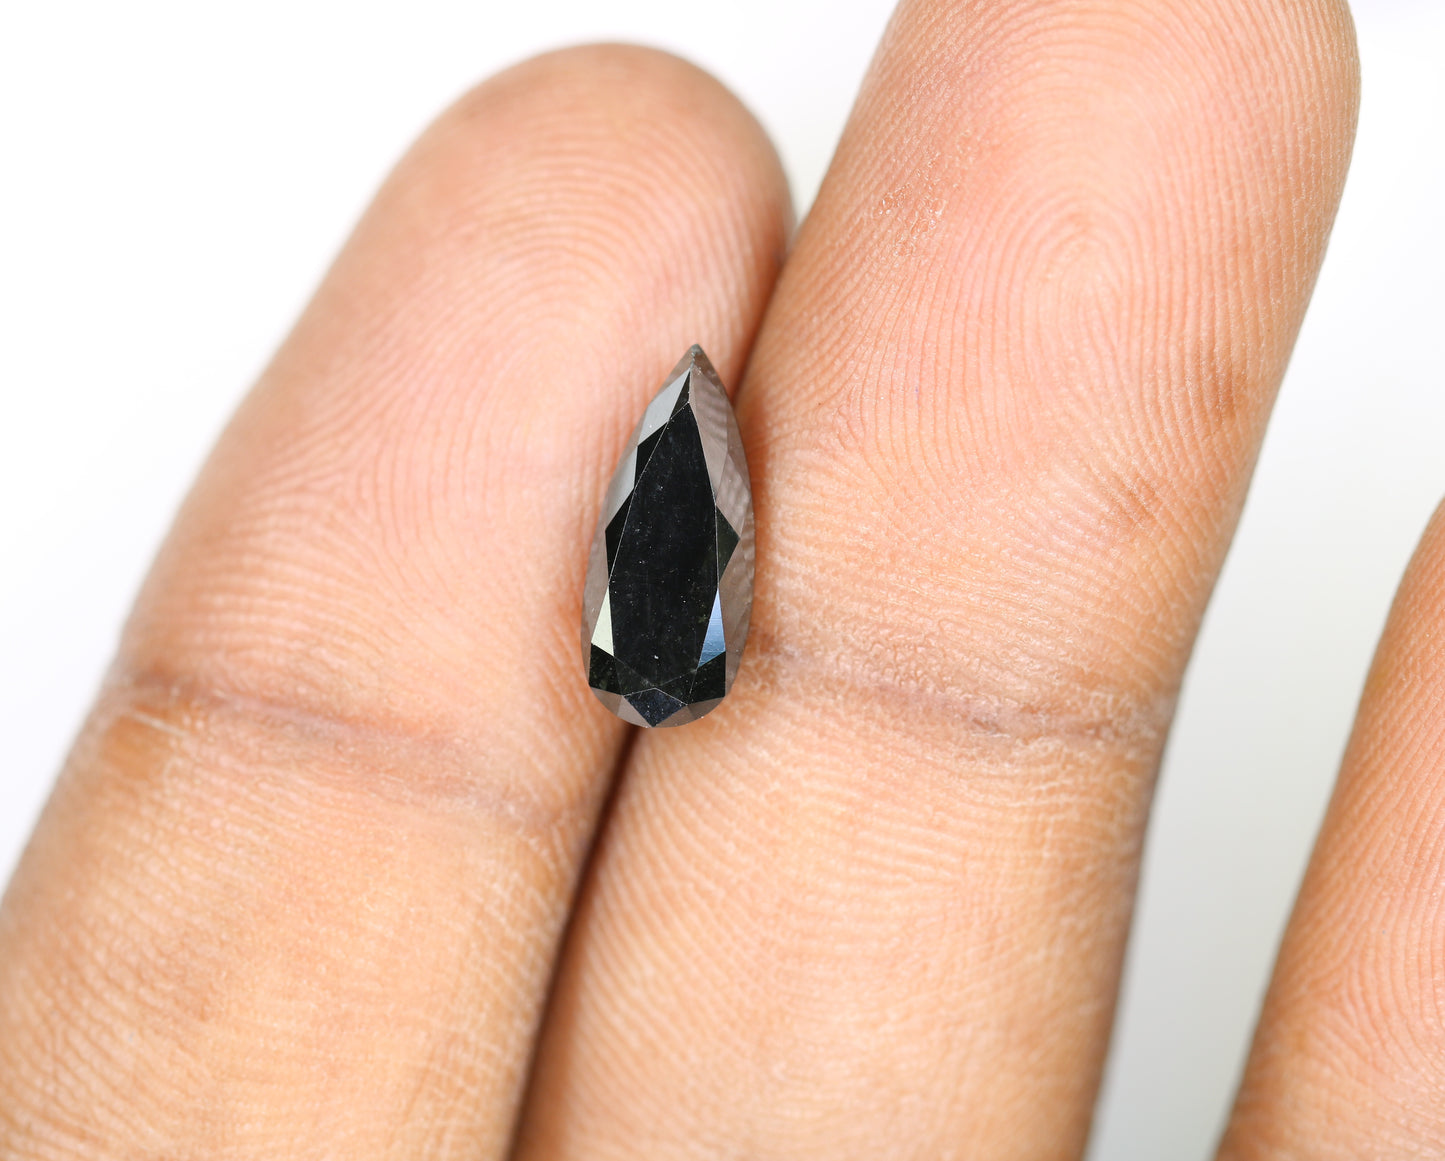 2.82 CT Black Pear Shape Diamond For Wedding Ring